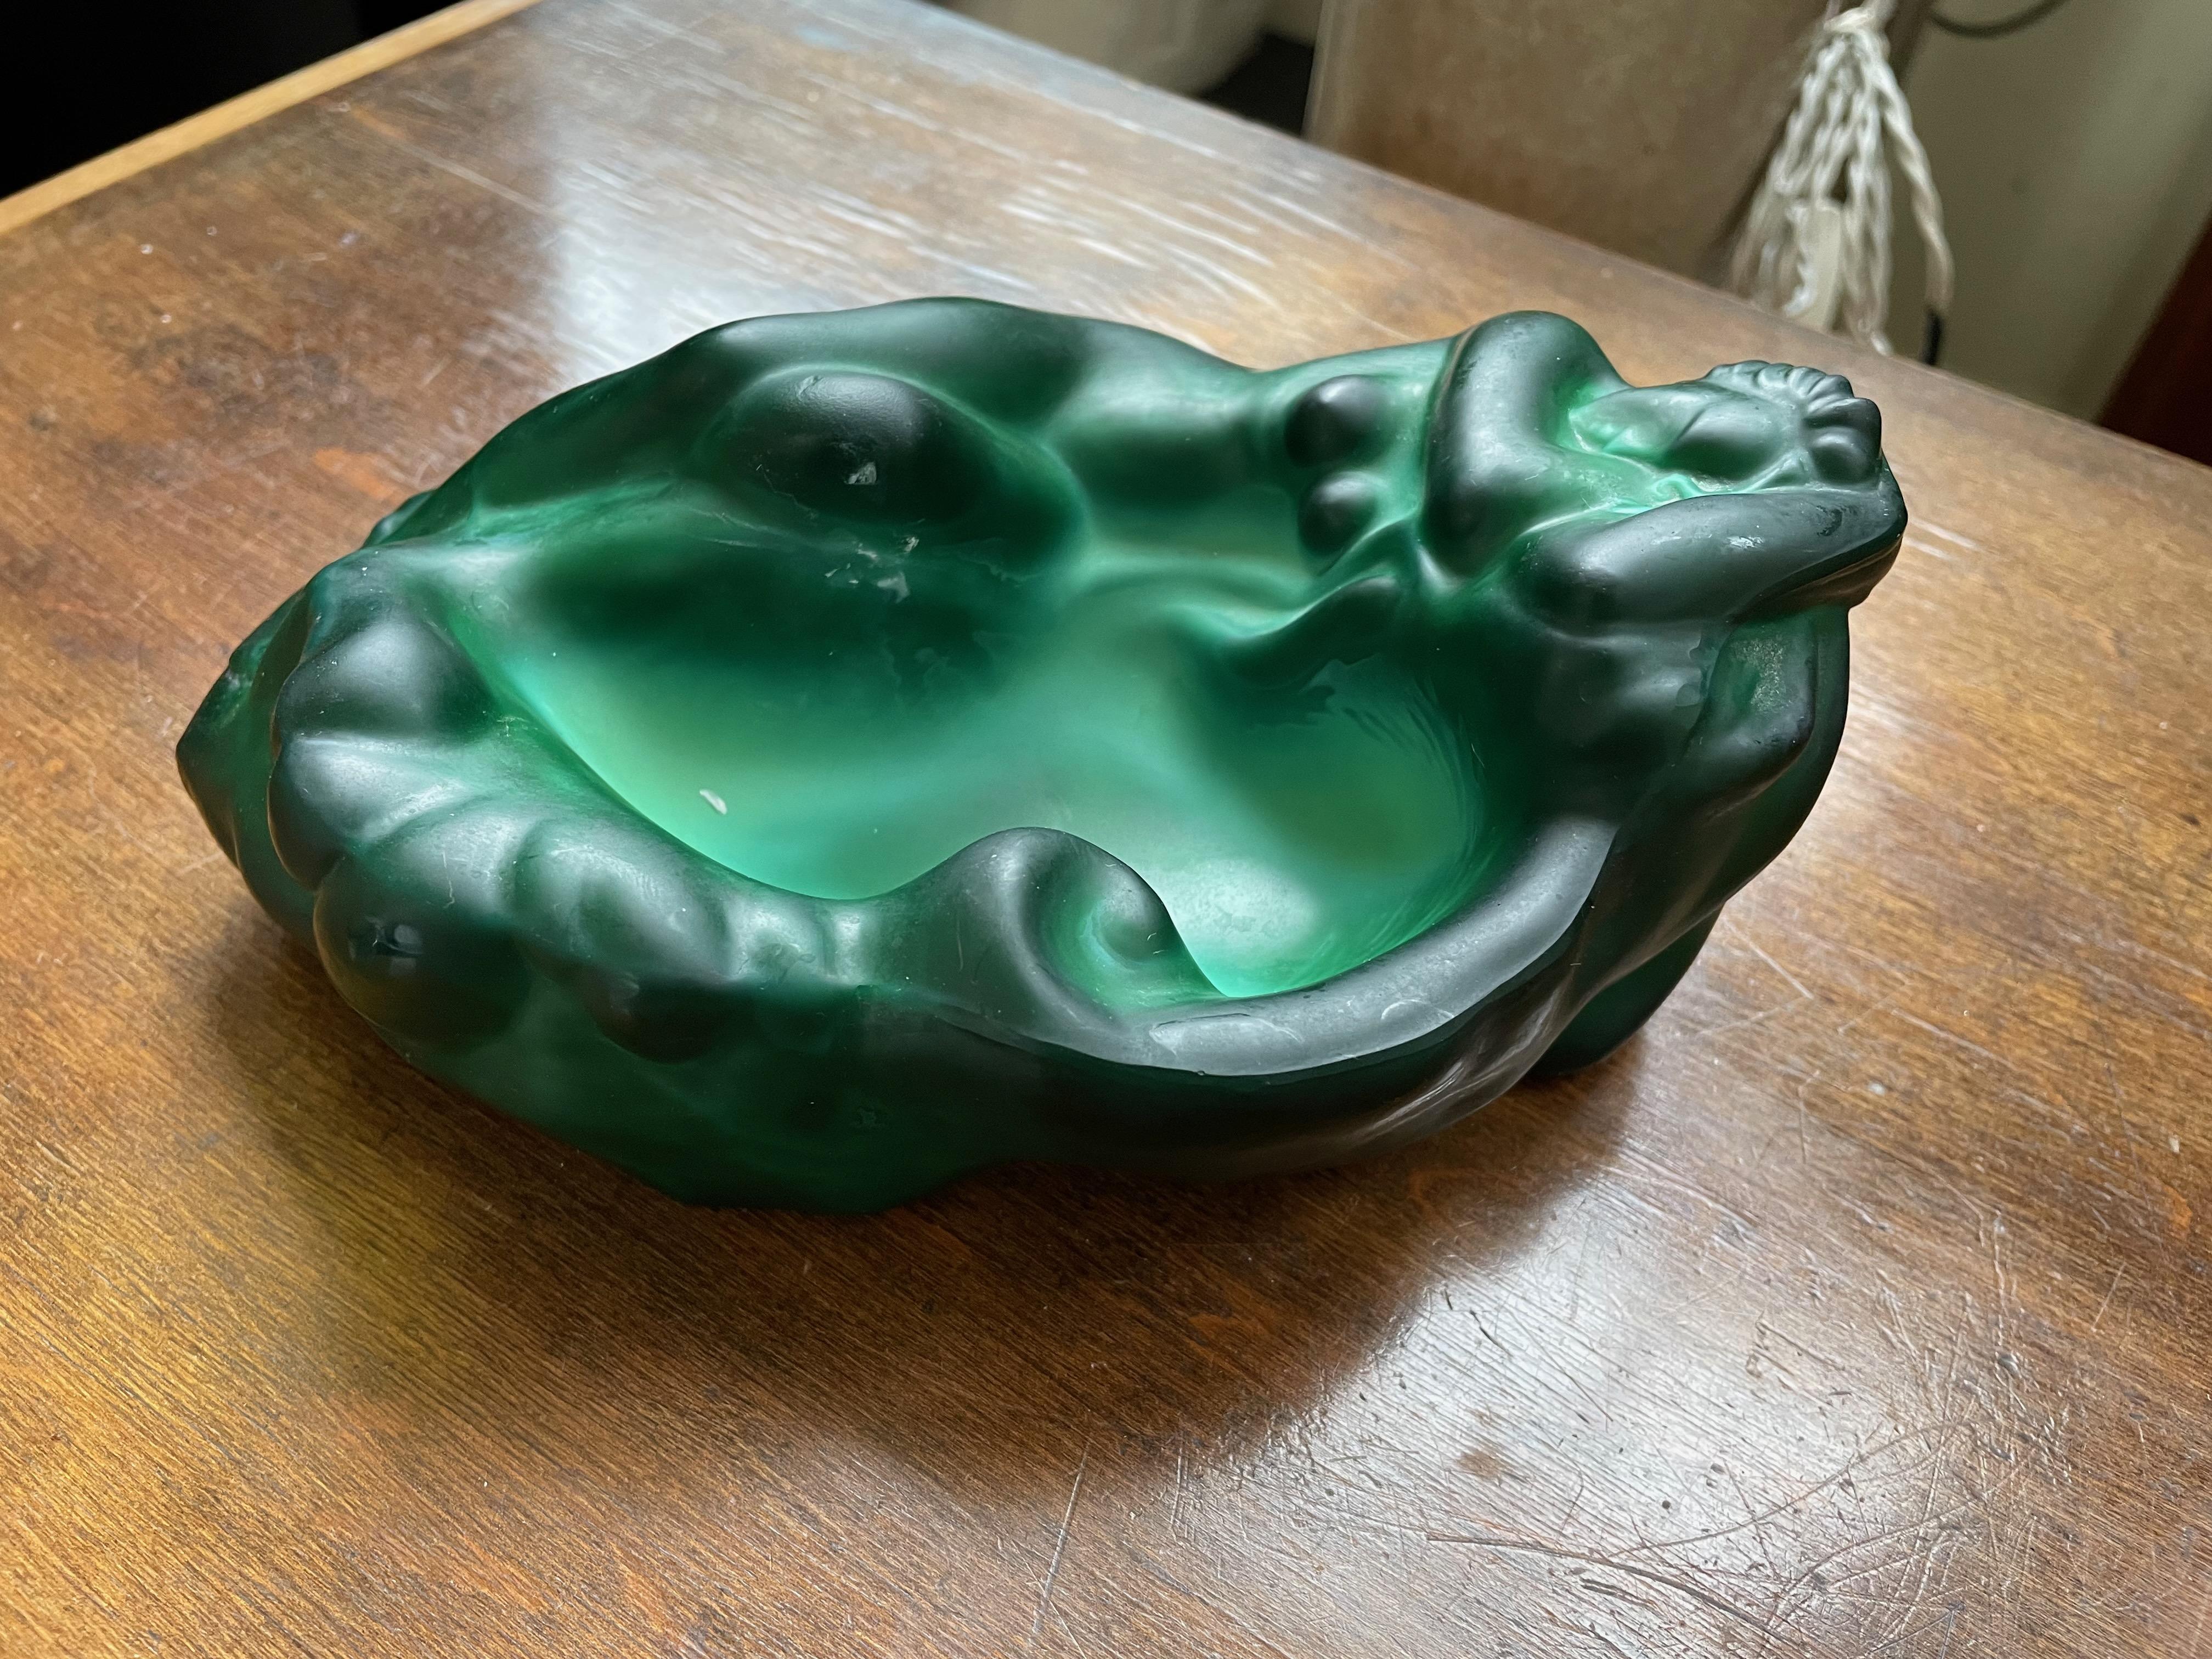 Decorative green Art Déco bowl with reclining female sculpture.
Carl Schlevogt. (1869-1959)
Czech Republic 1930s.
Good original condition.
Malachit.